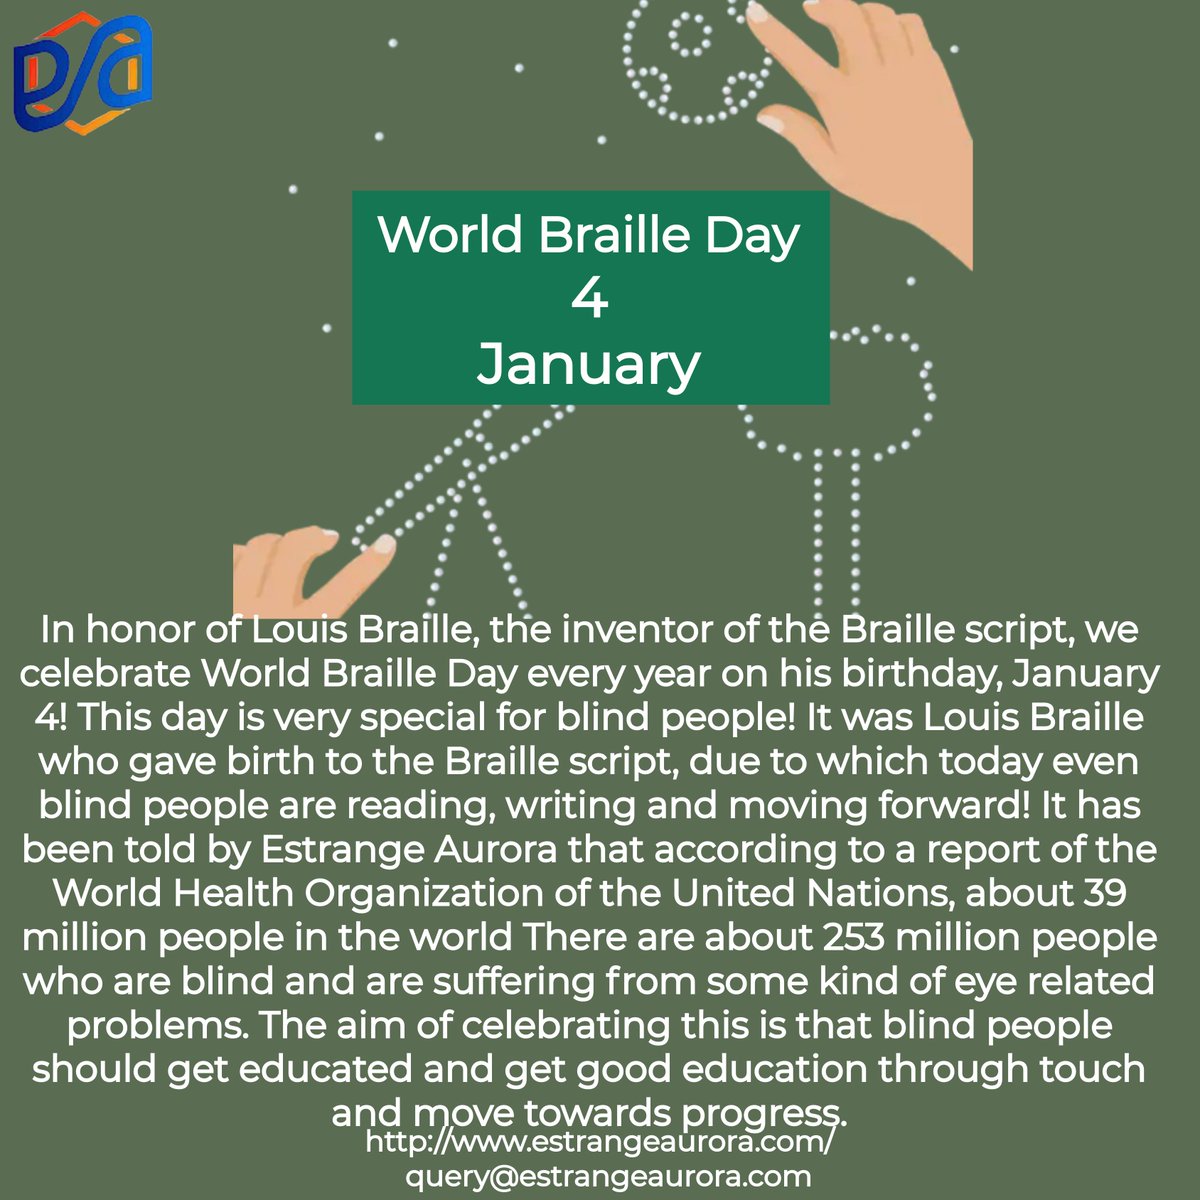 Happy World Braille Day from Estrange Aurora.
#braille #blind #o #blindness #visuallyimpaired #braillearmy #inclusion #accessibility #brailleart #brailleskateboarding #skateboard #louisbraille #brailleday #worldbrailleday #lowvision #brailleskate #visualimpairment #EstrangeAurora